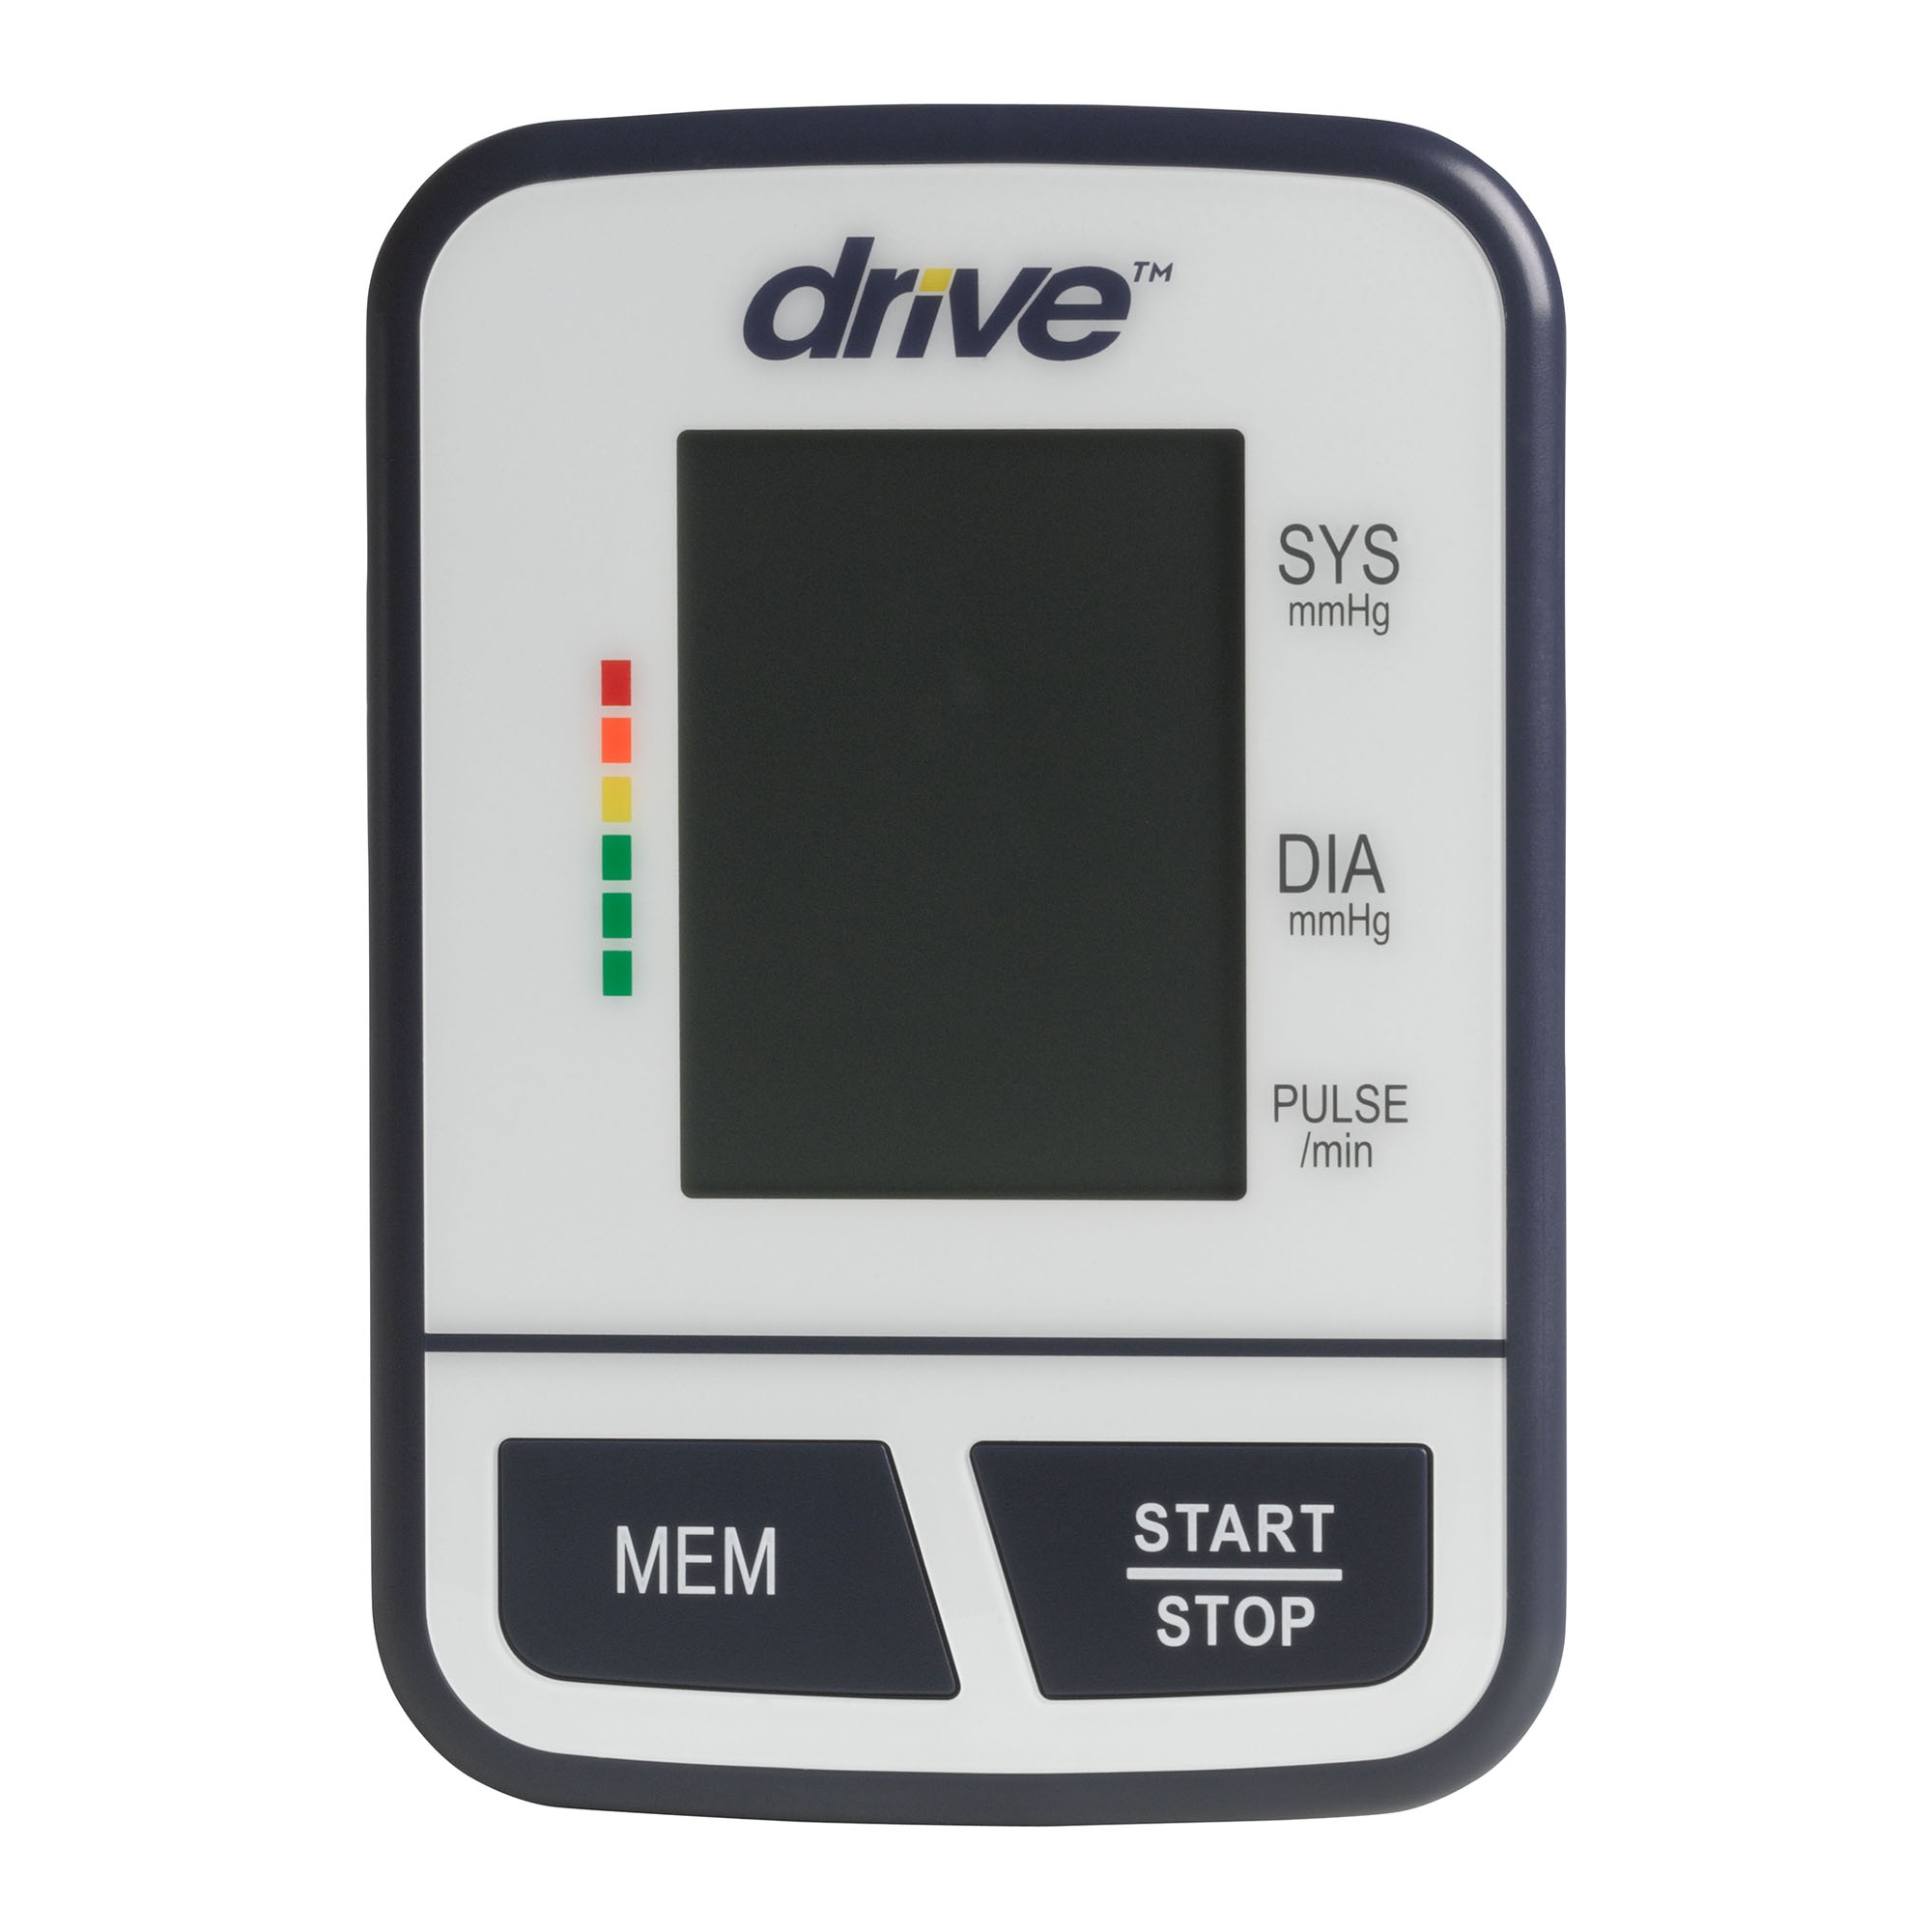 Digital Wrist Blood Pressure Monitor Displays BP, Pulse Rate and Irregular  Heartbeat, FSA/HSA 